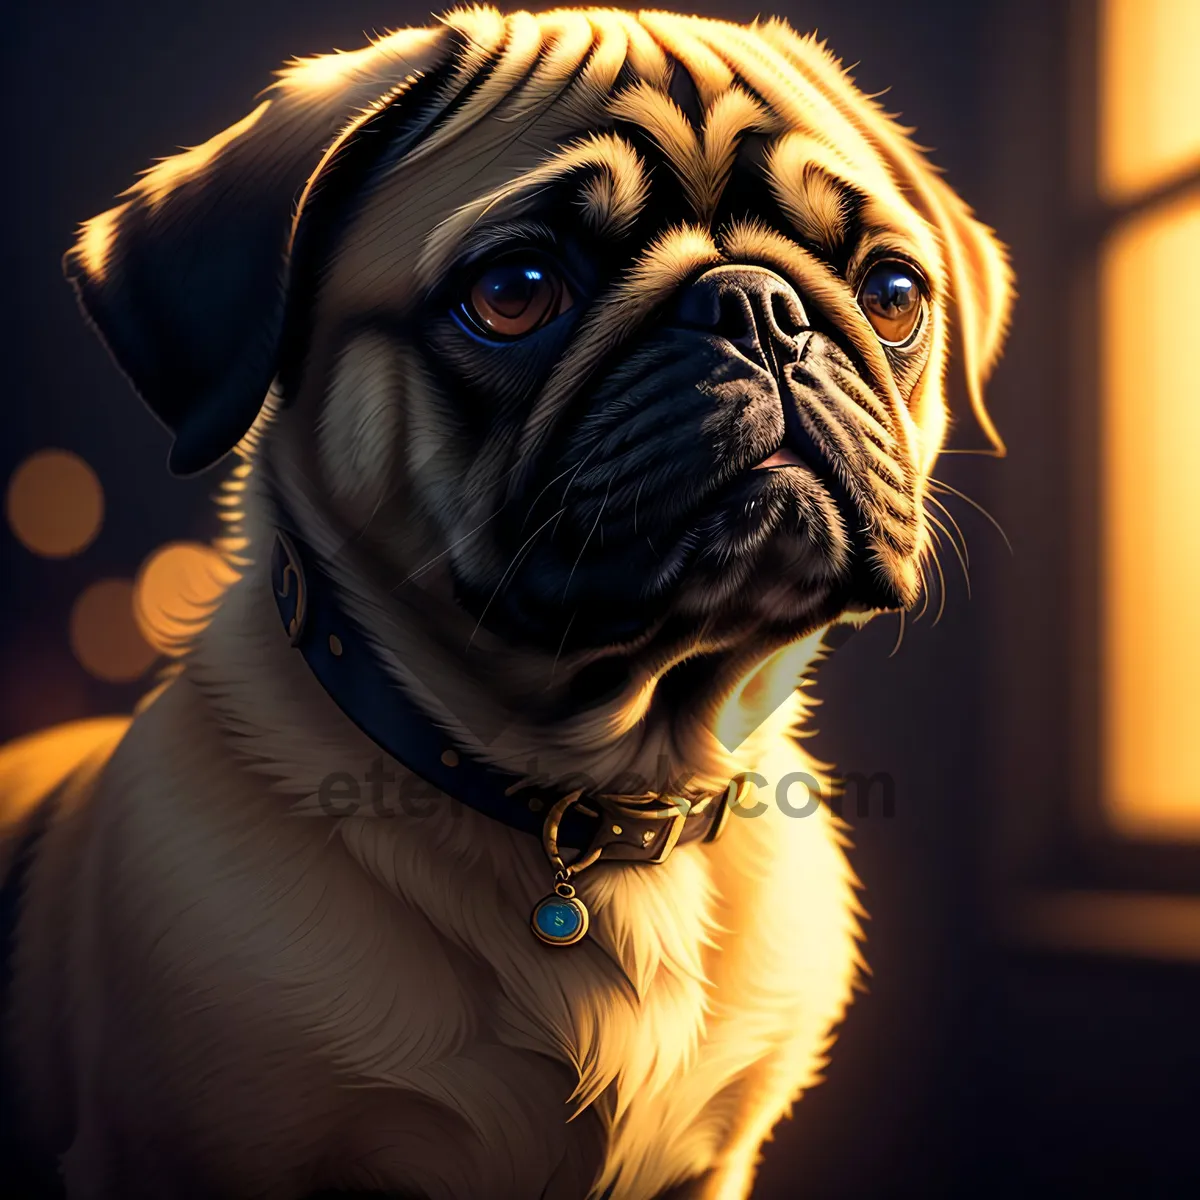 Picture of Adorable Pug Puppy in Studio Portrait